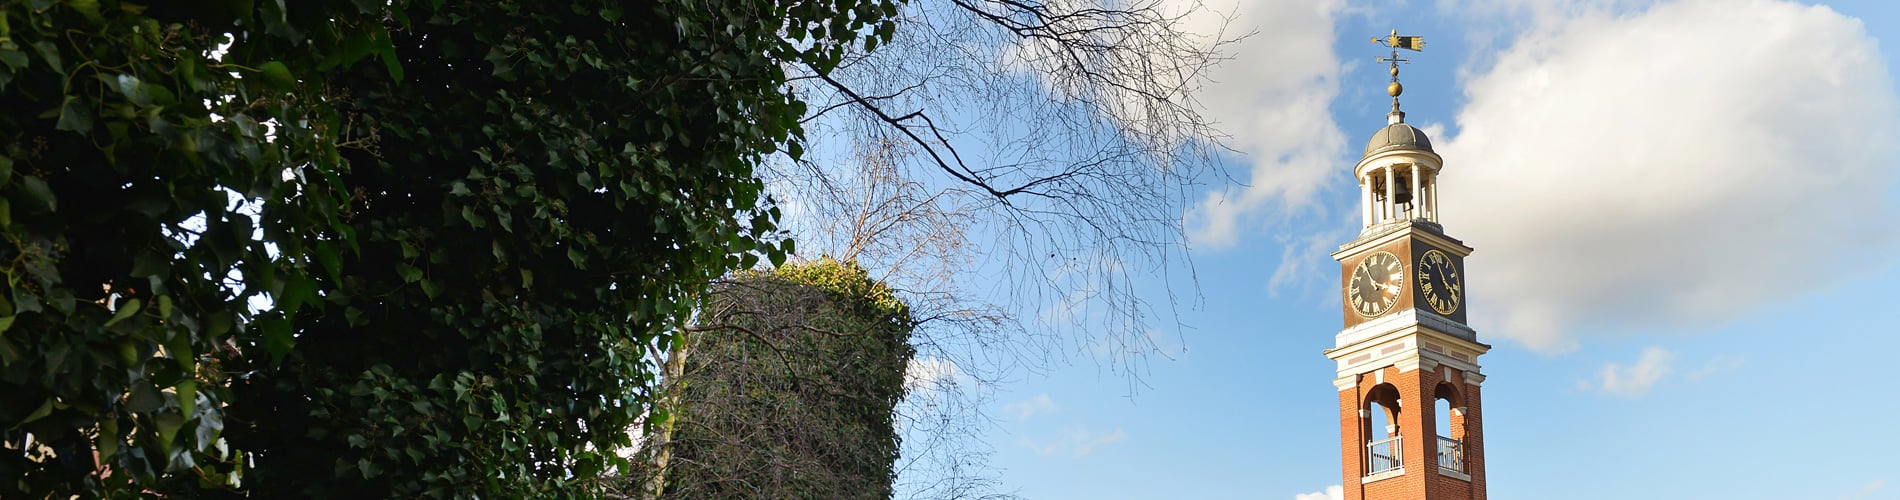 Watchtower viewed through trees